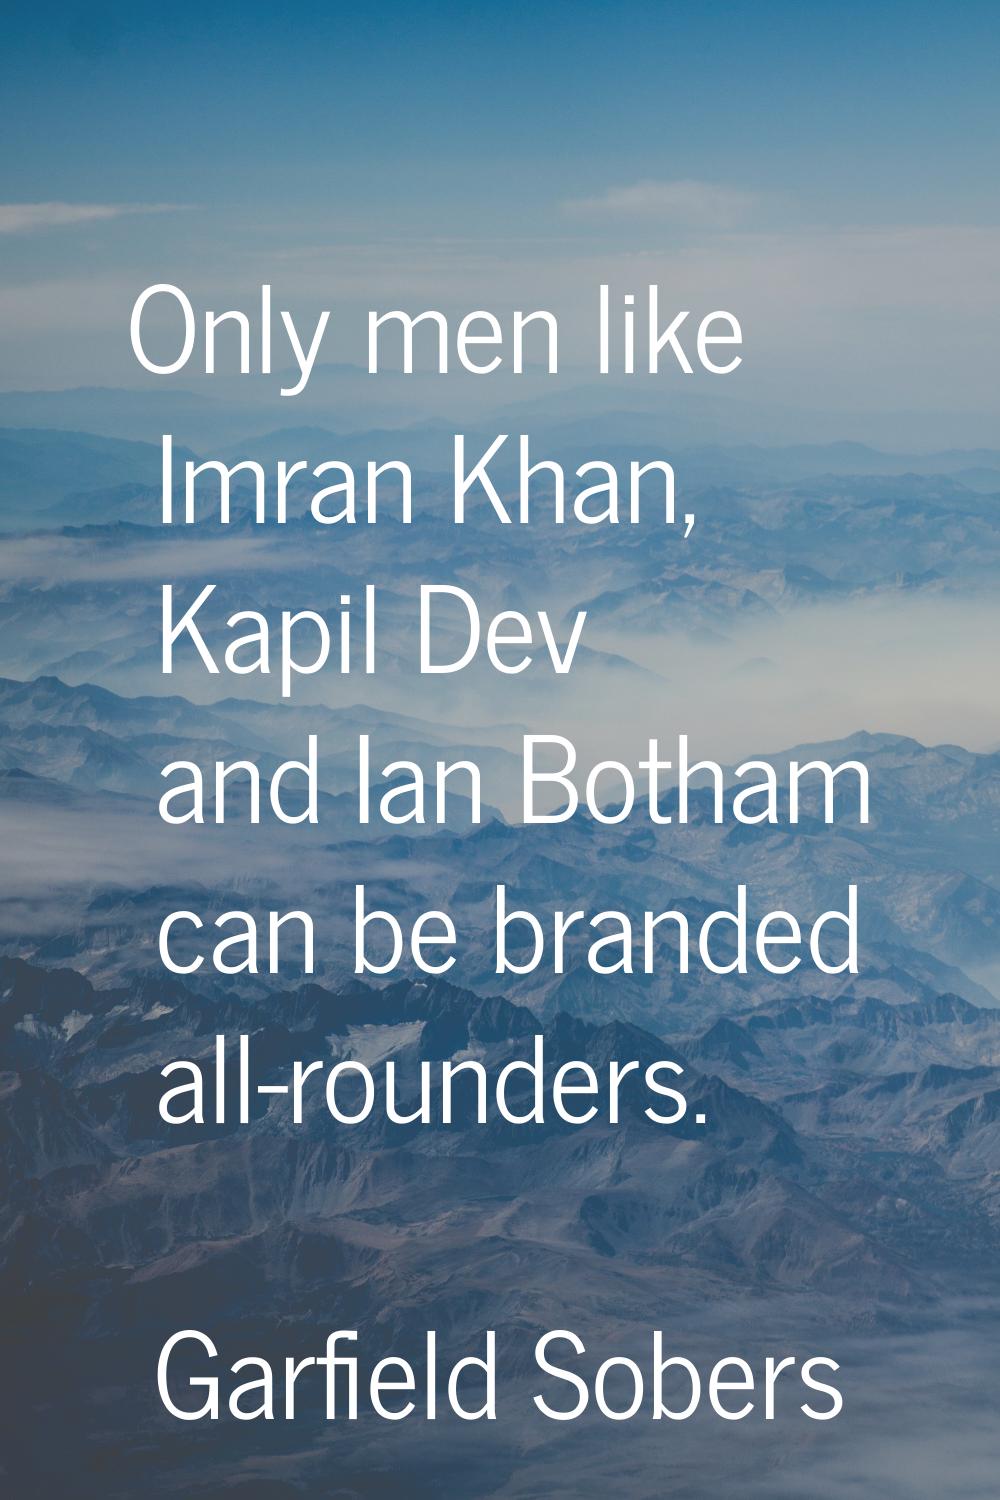 Only men like Imran Khan, Kapil Dev and Ian Botham can be branded all-rounders.